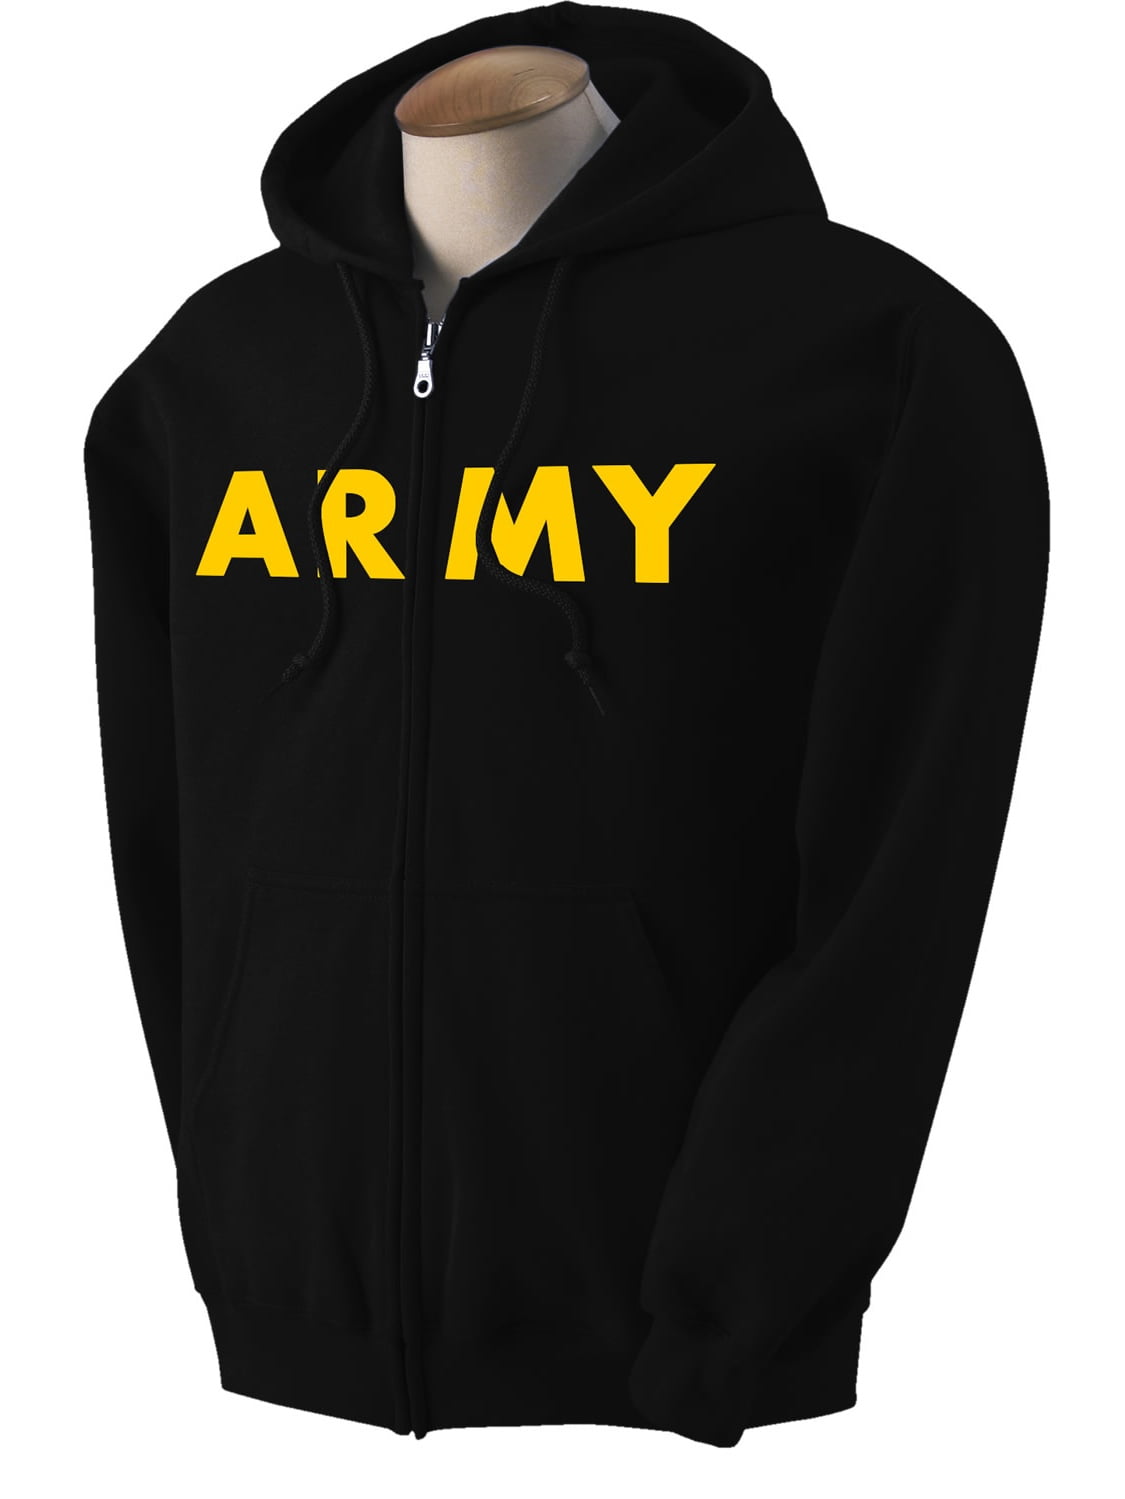 Army Zipper Hoodie - Army Military